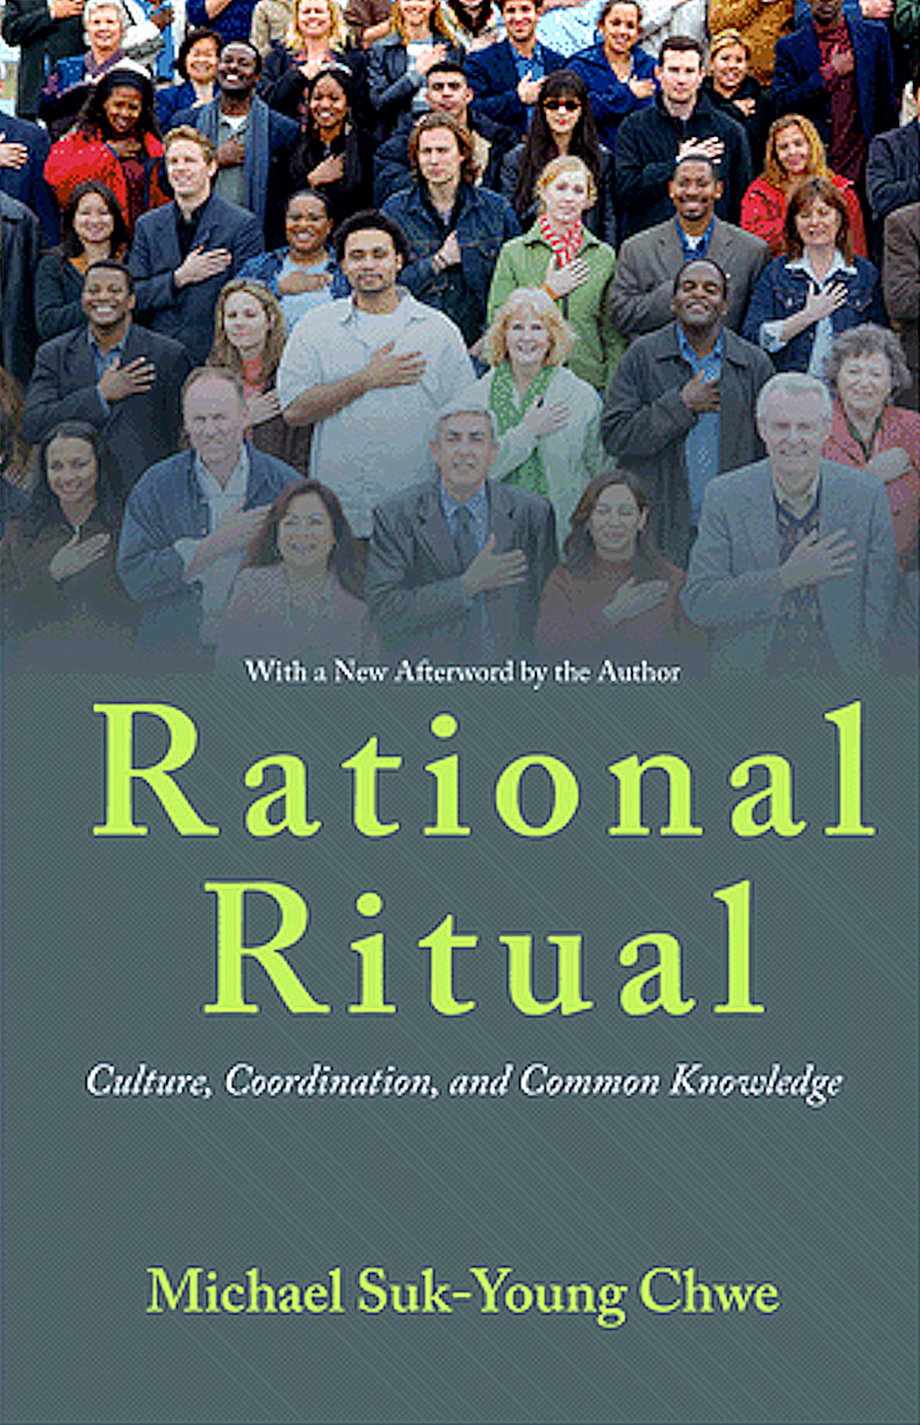 'Rational Ritual' by Michael Suk-Young Chwe